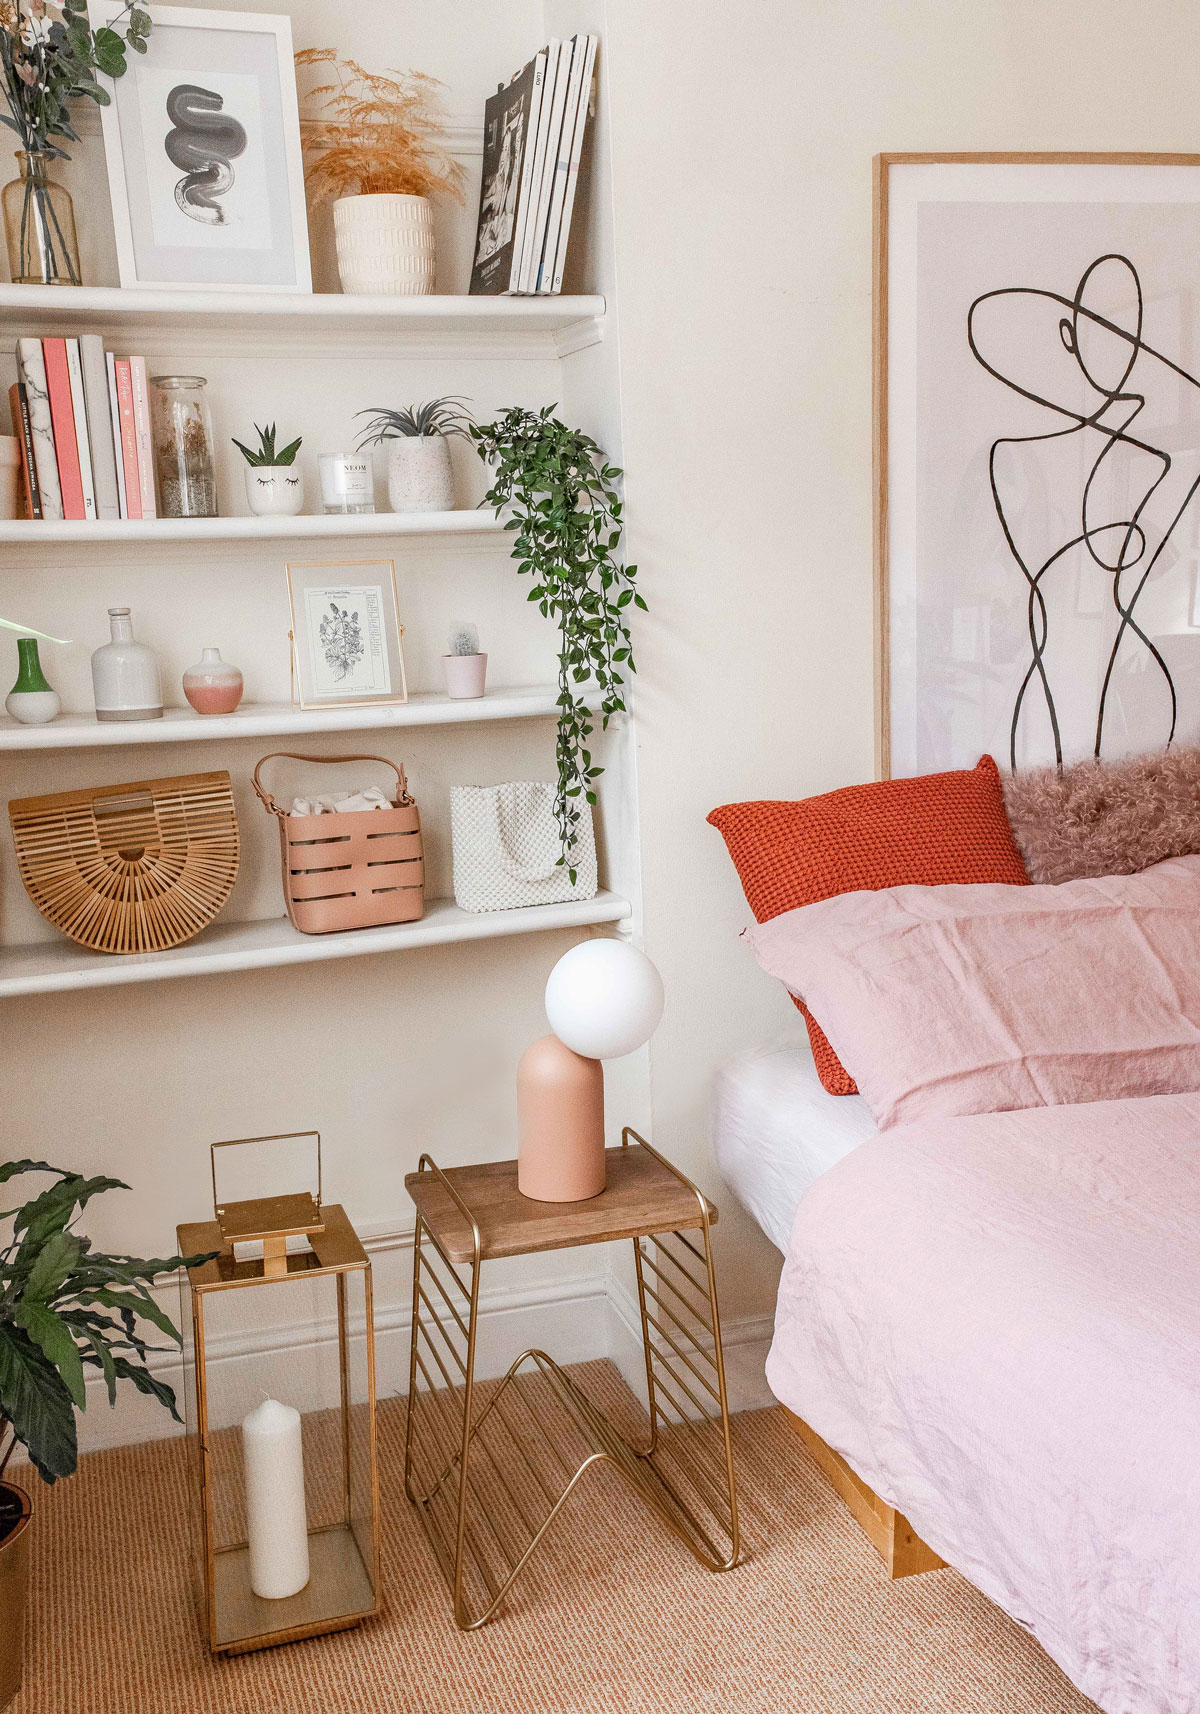 kelsey-heinrichs-@kelseyinlondon-made-bedroom-decoration-bedroom-ideas-bedroom-furniture-bedroom-inspiration-bedroom-styling-3